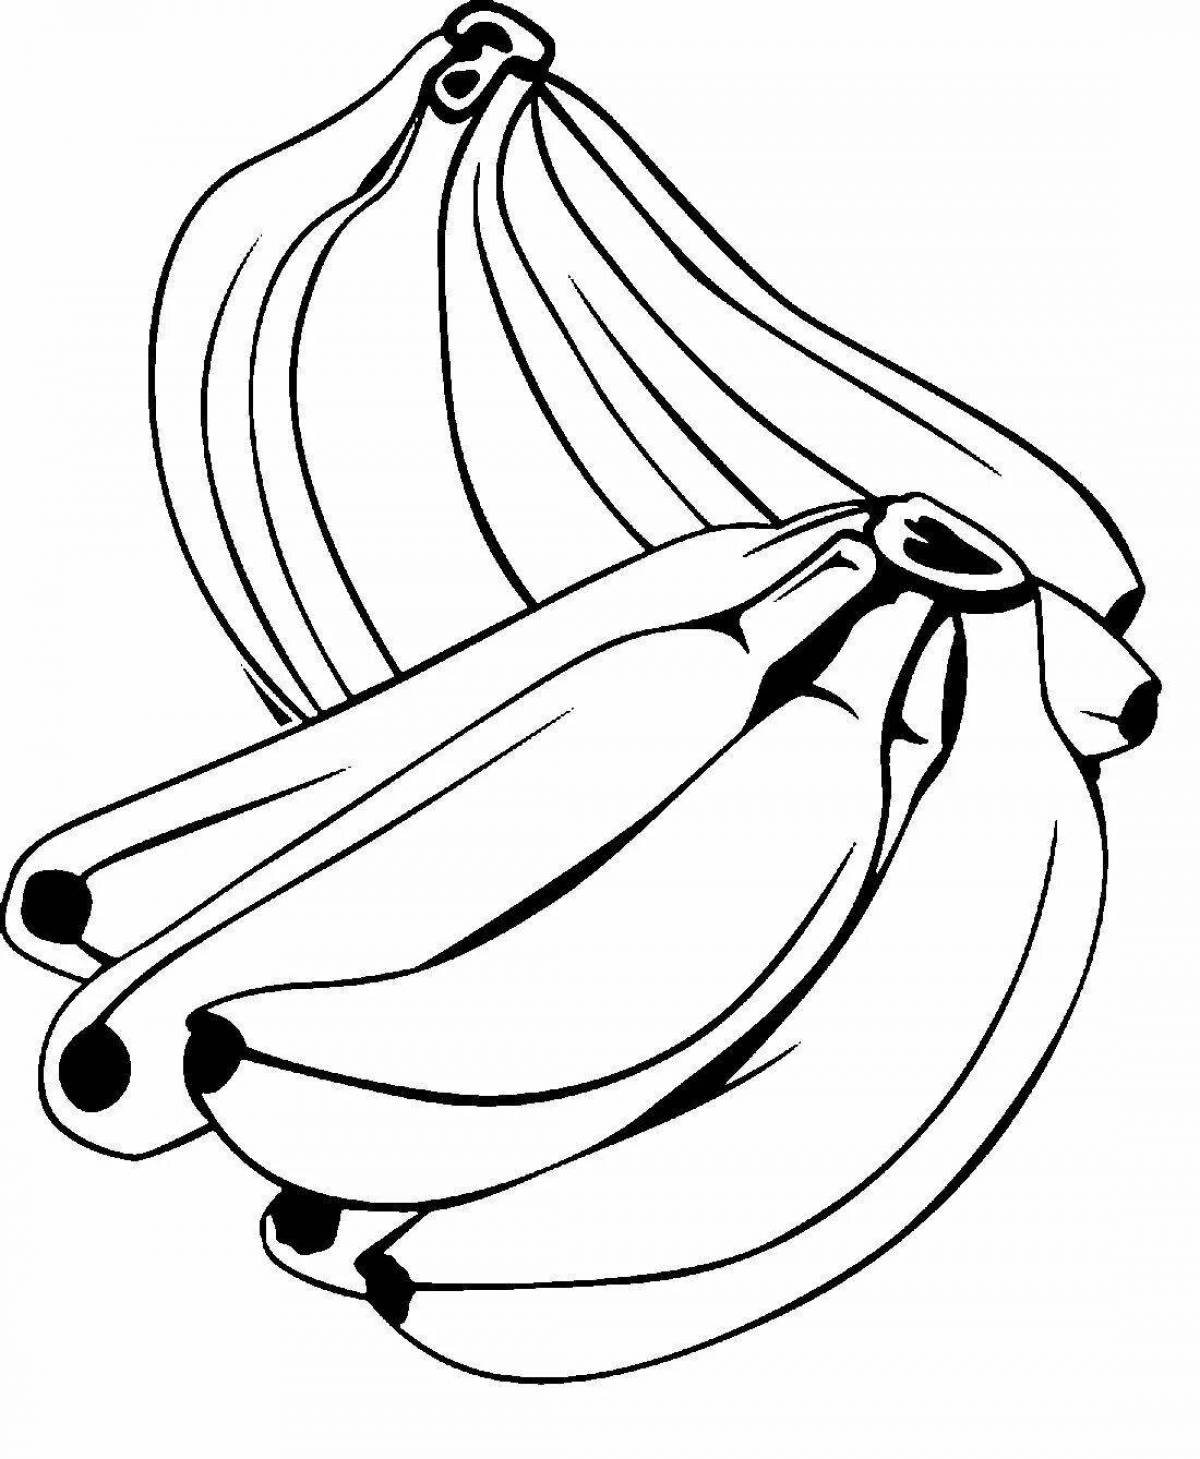 Colorful banana pattern